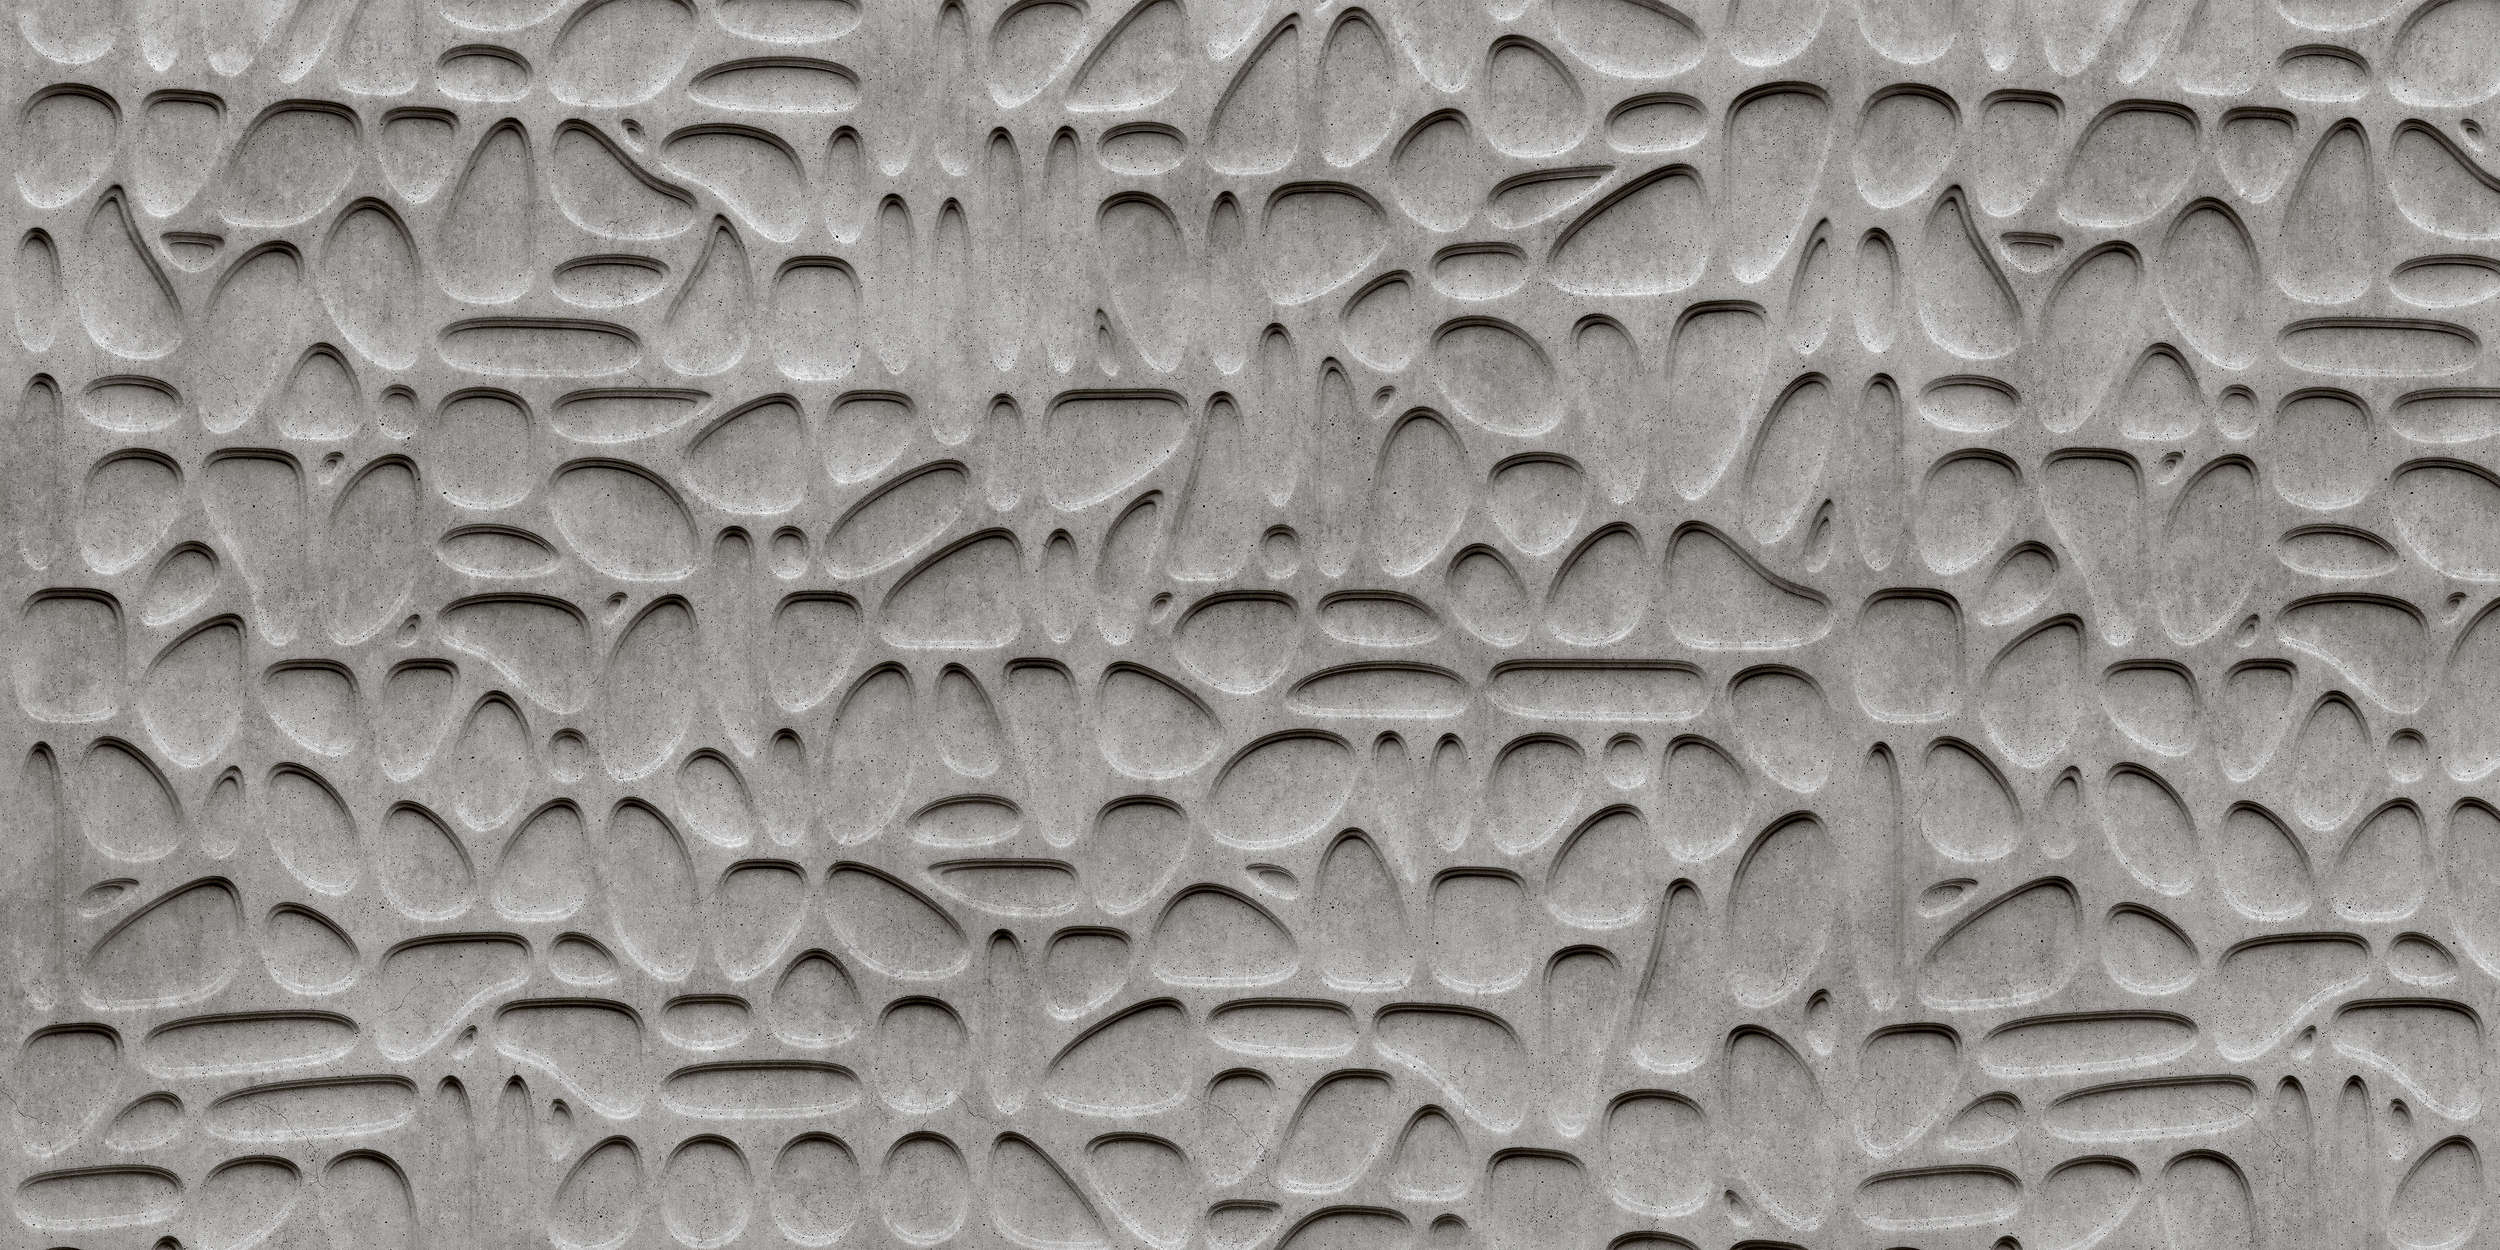             Maze 1 - Cool 3D Concrete Bubbles Wallpaper - Grey, Black | Premium Smooth Non-woven
        